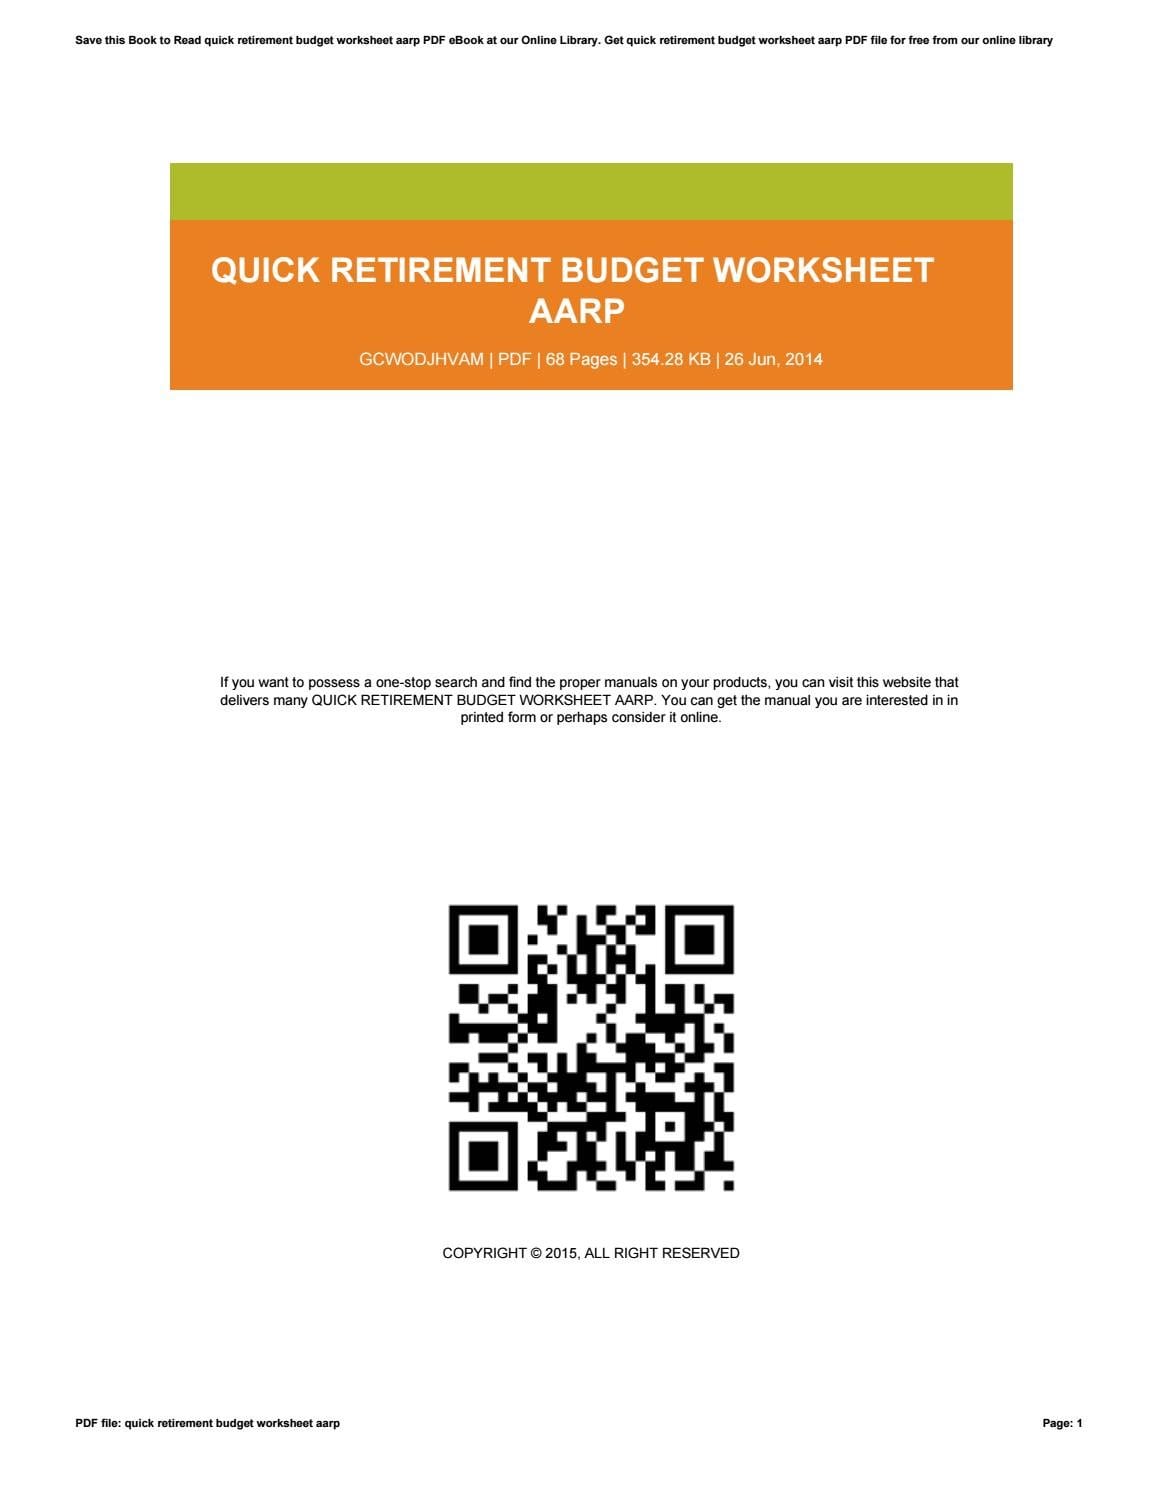 Quick Retirement Budget Worksheet Aarplaurelsipes4449  Issuu Intended For Aarp Retirement Budget Worksheet